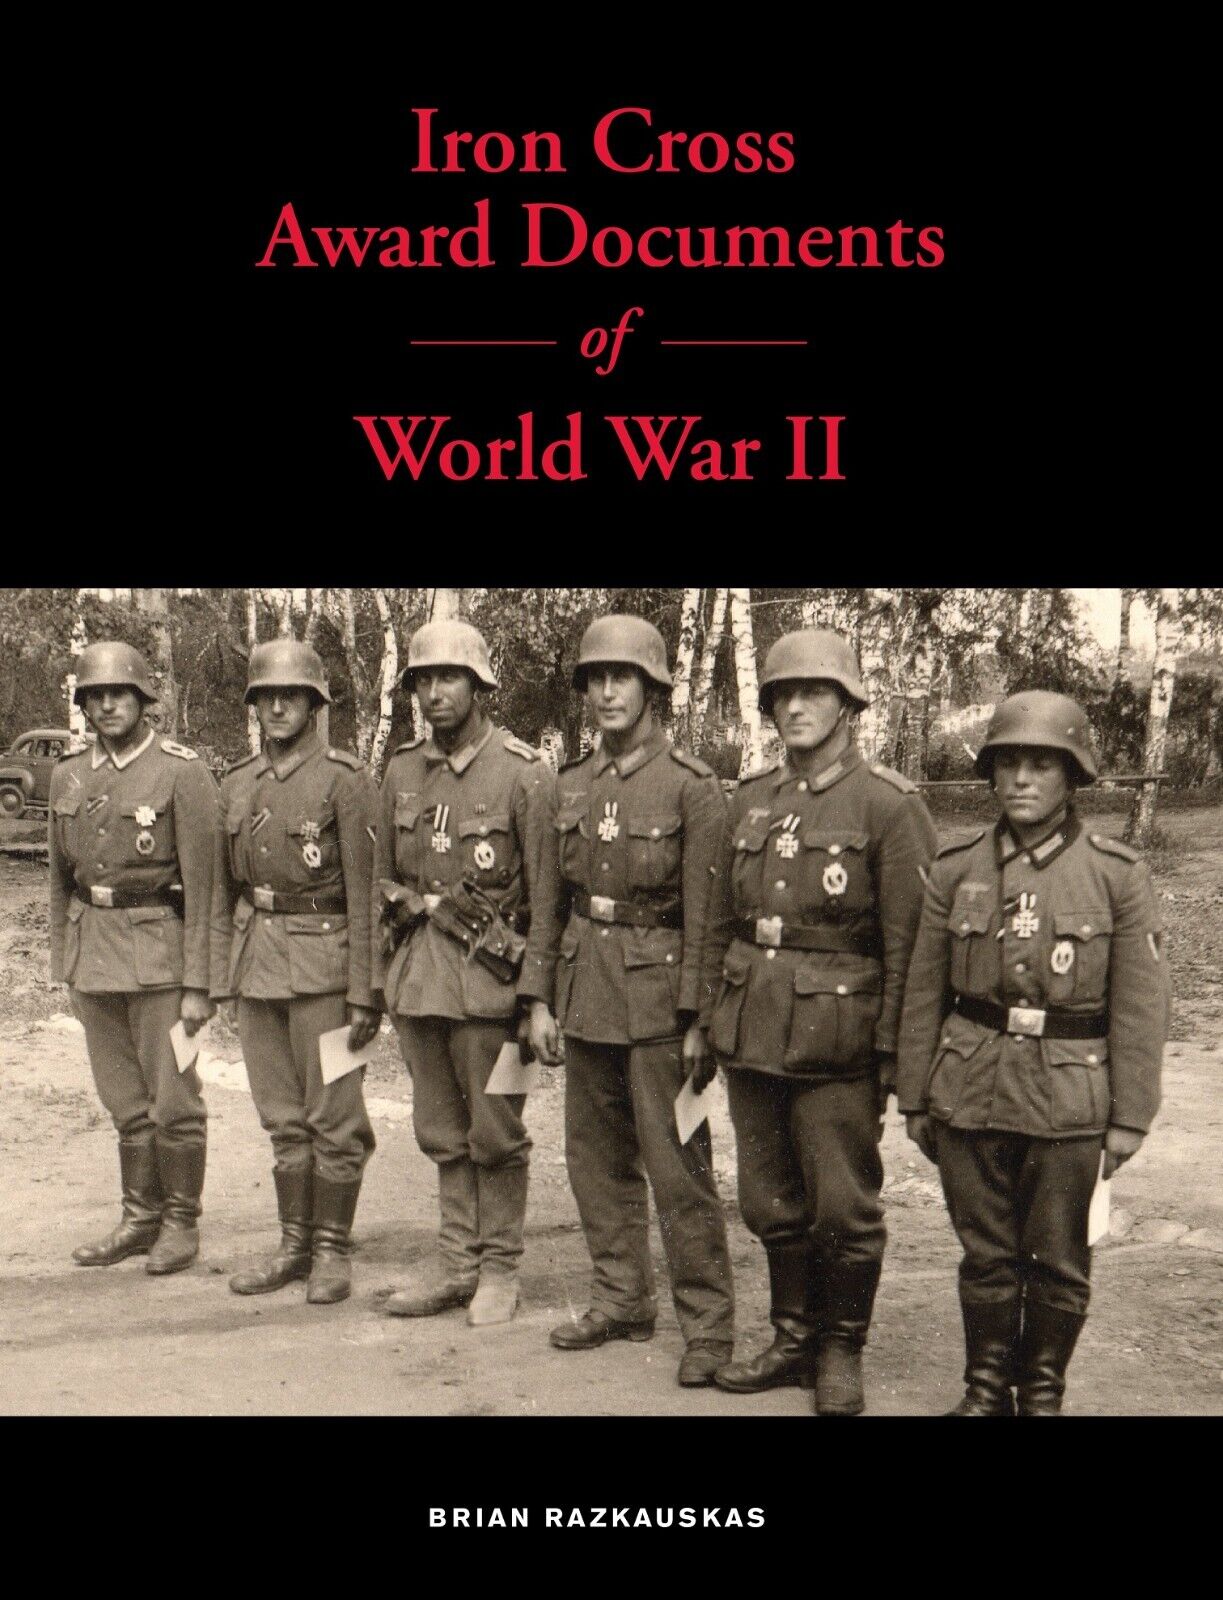 Book - Iron Cross Award Documents of World War II - Brand New